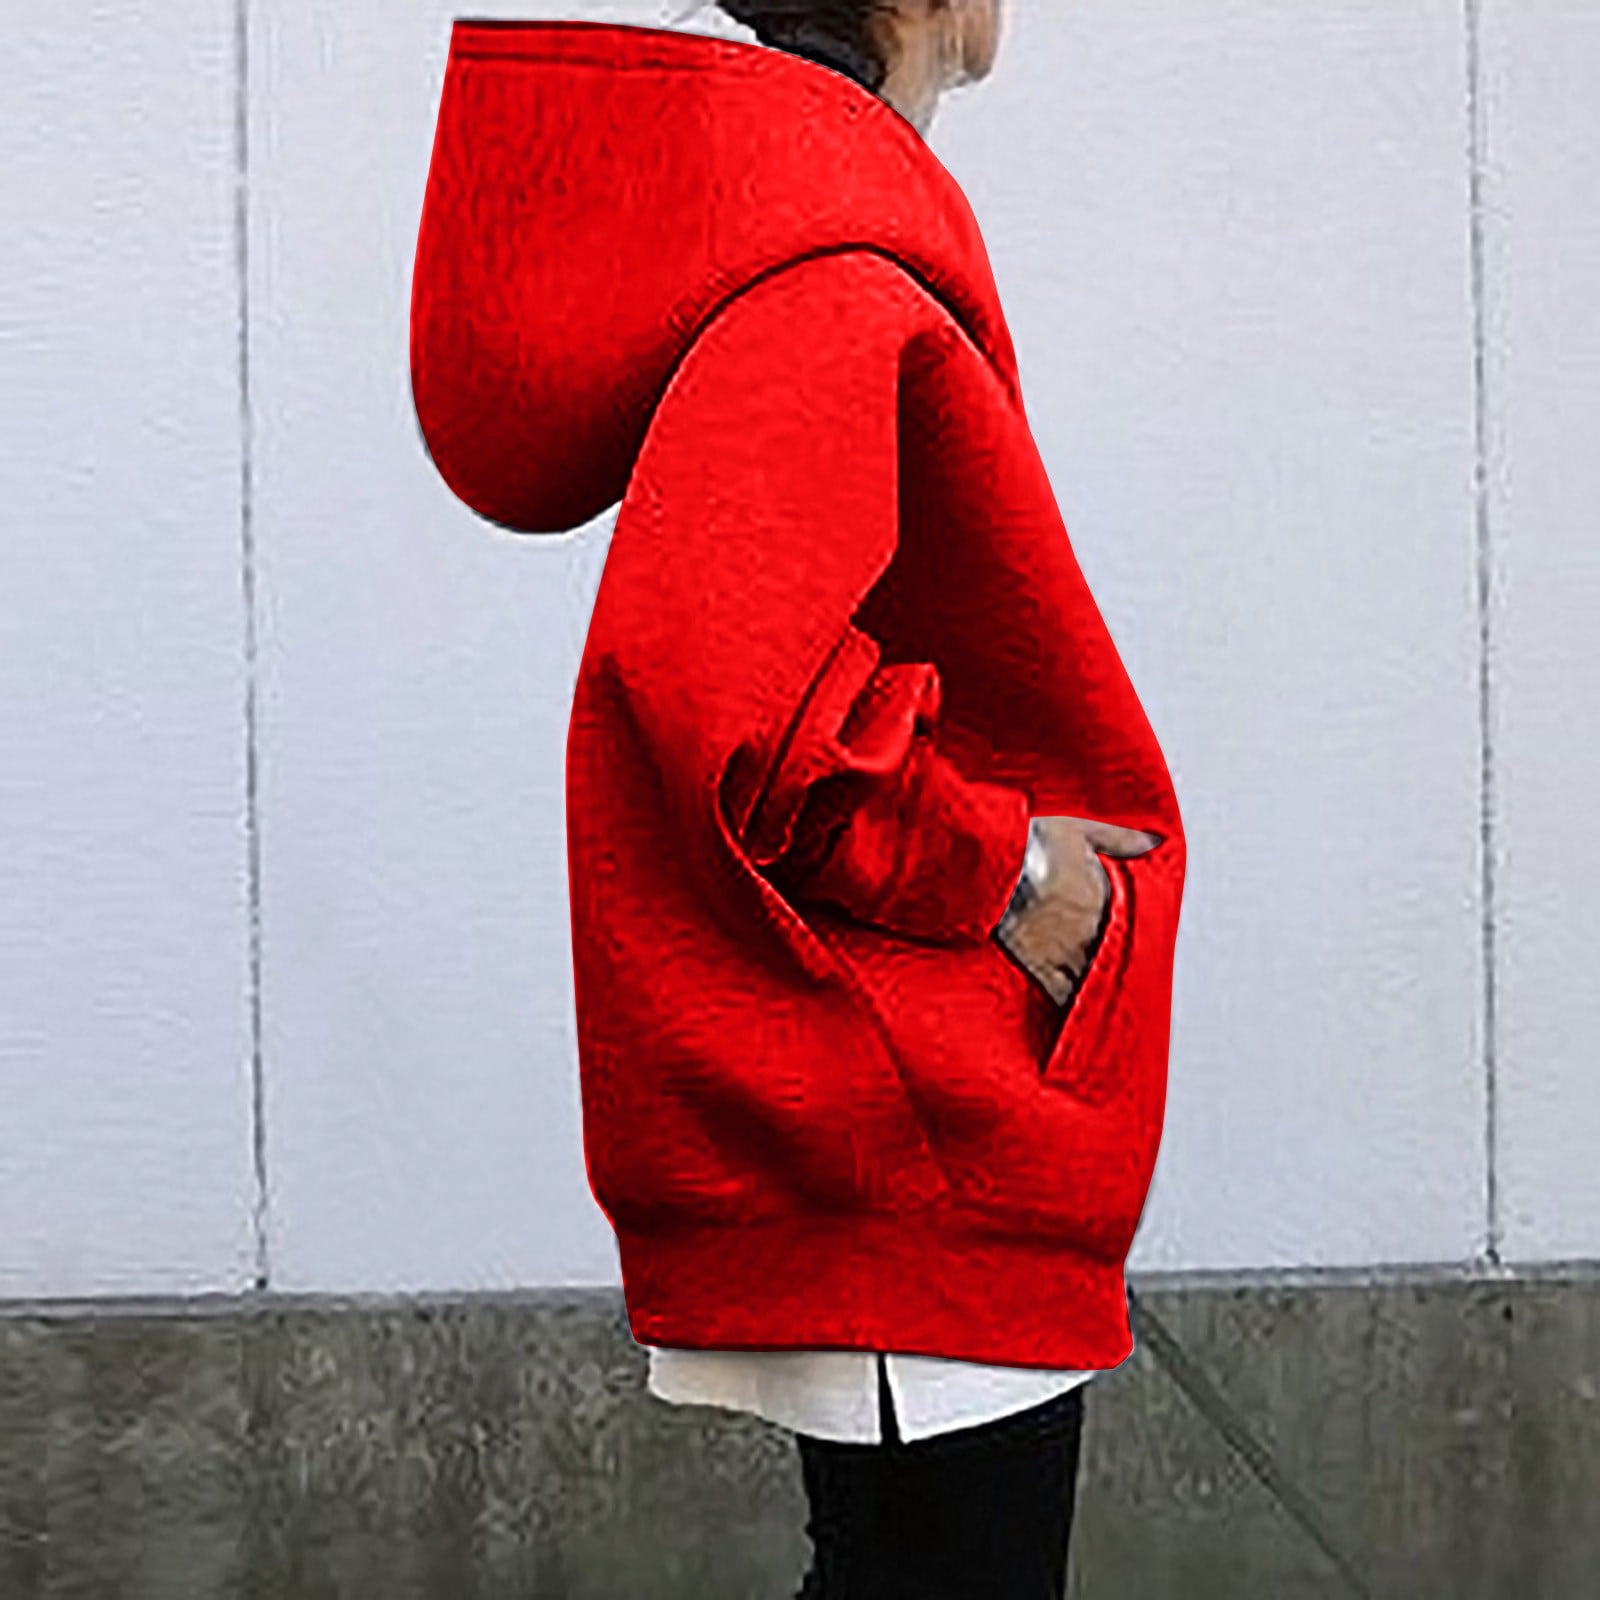 Gubotare Sweatshirt Women Womens Long Sleeve French Terry Full-Zip Hooded  Sweatshirt (Red,S)